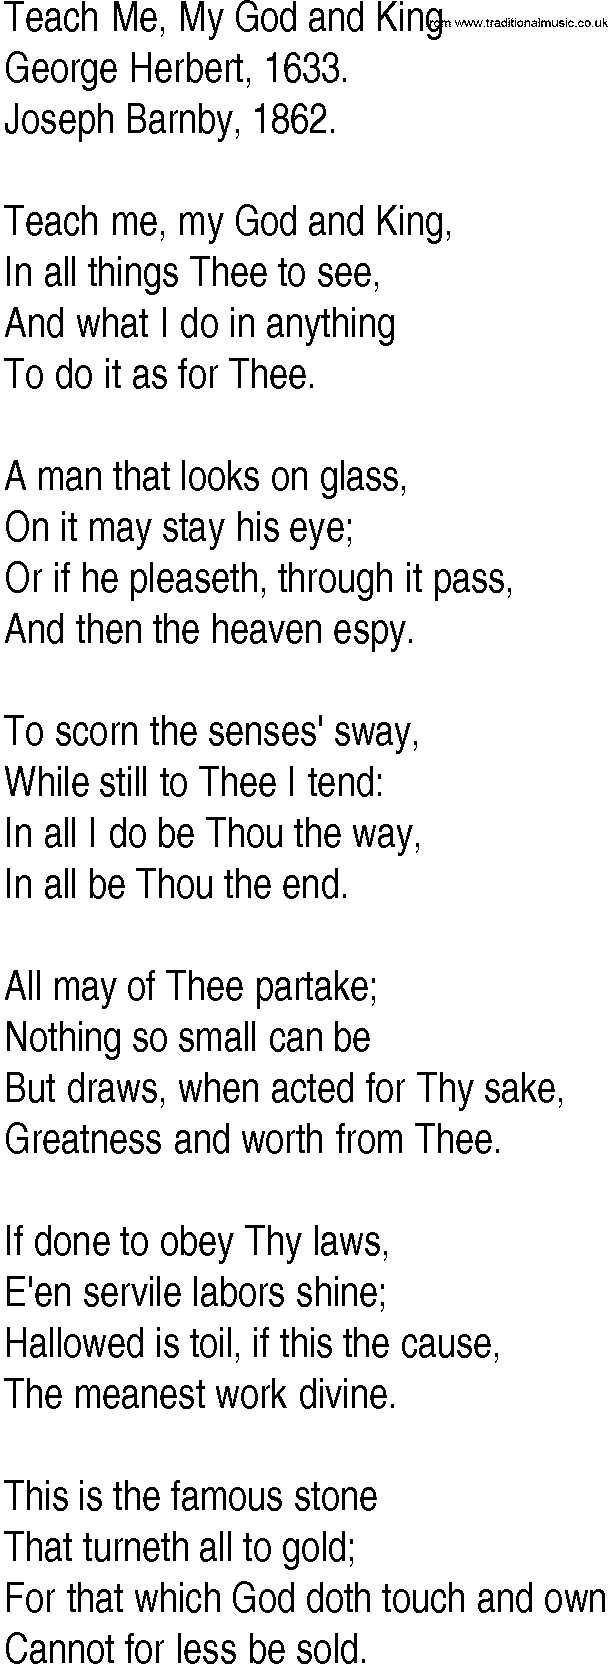 Hymn and Gospel Song: Teach Me, My God and King by George Herbert lyrics